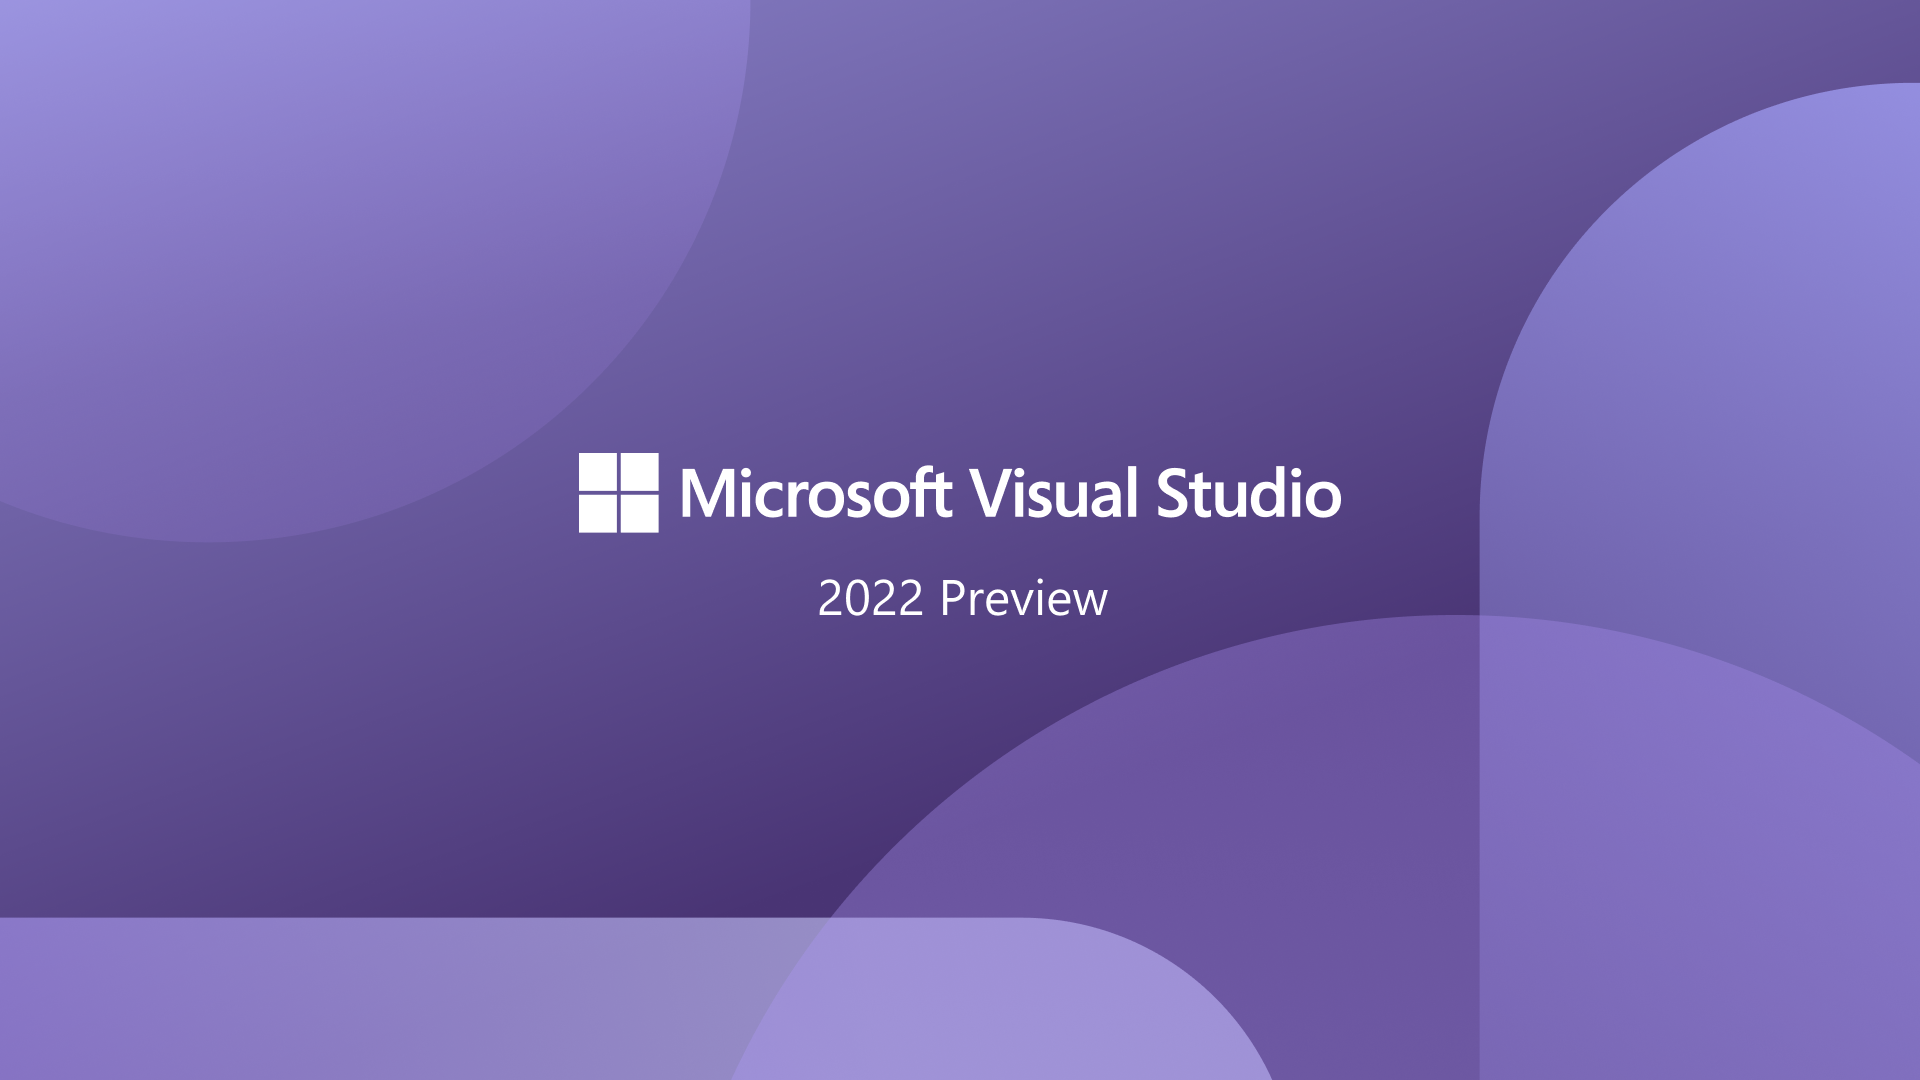 visual studio for mac community c++